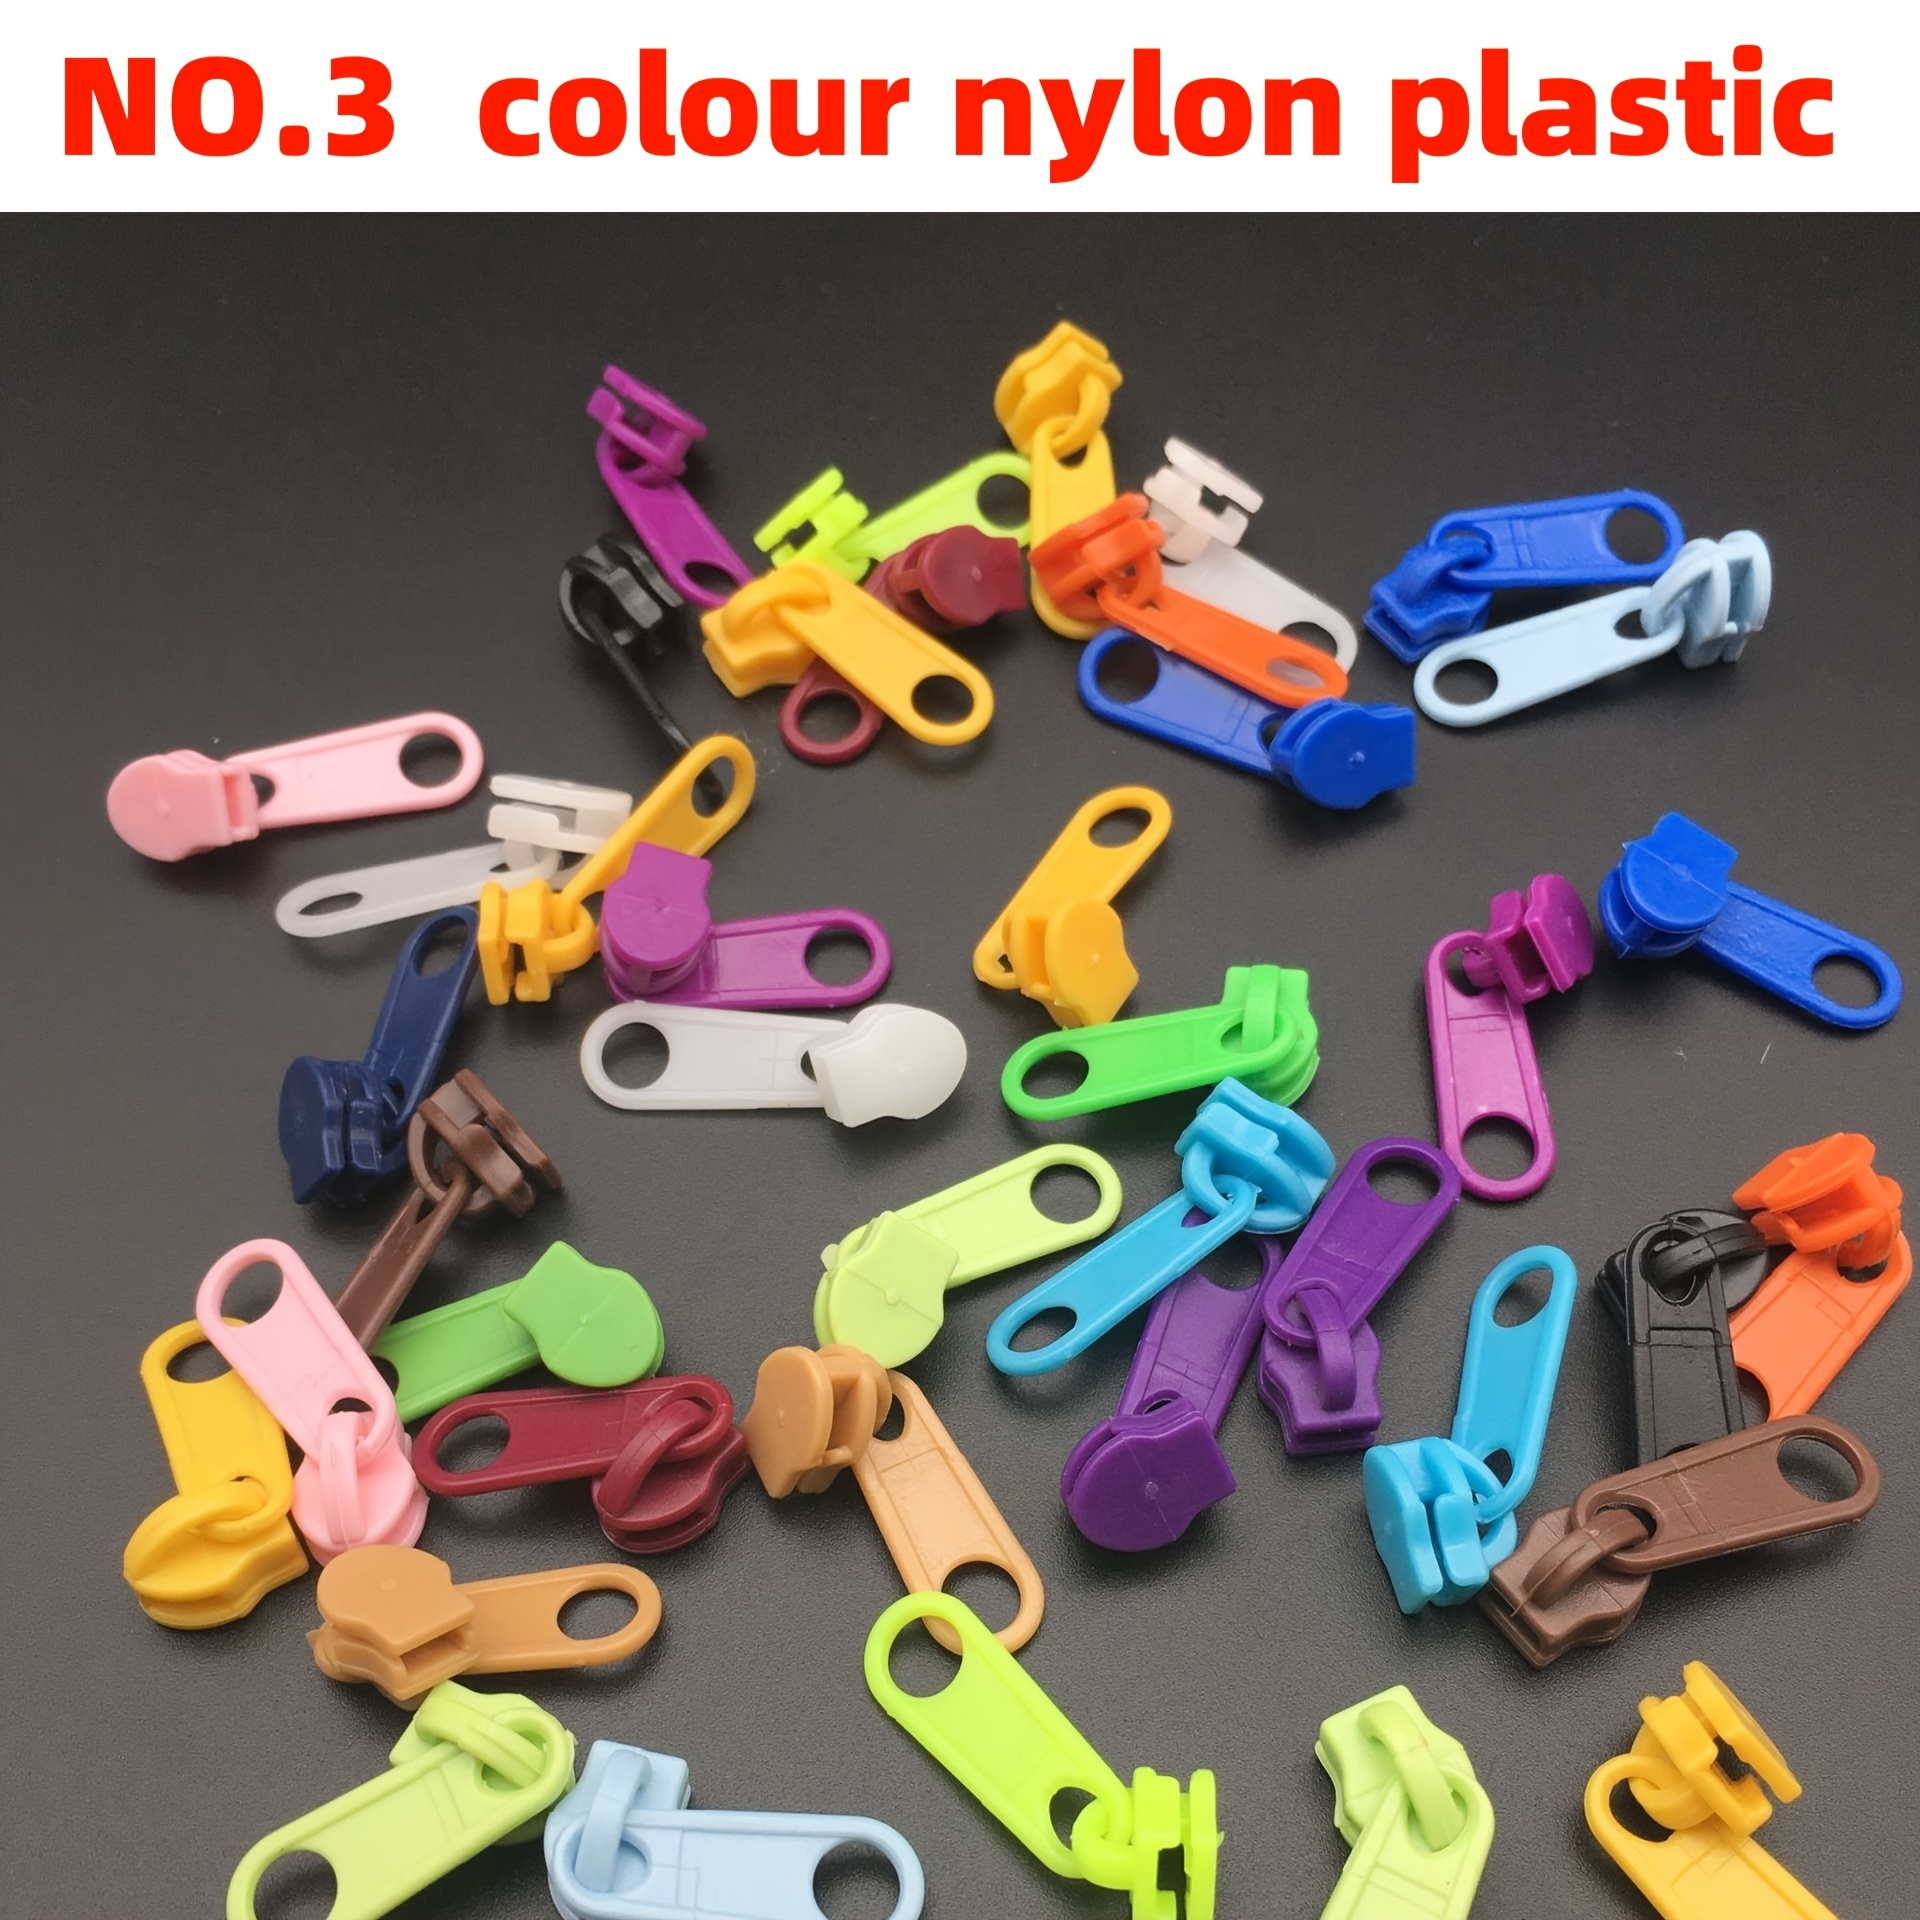 

100pcs No.3 Colorful Nylon Plastic Zipper Pulls, Diy Replacement Zipper Heads For Repair Kits, Travel Bags, Handbags, Multicolor